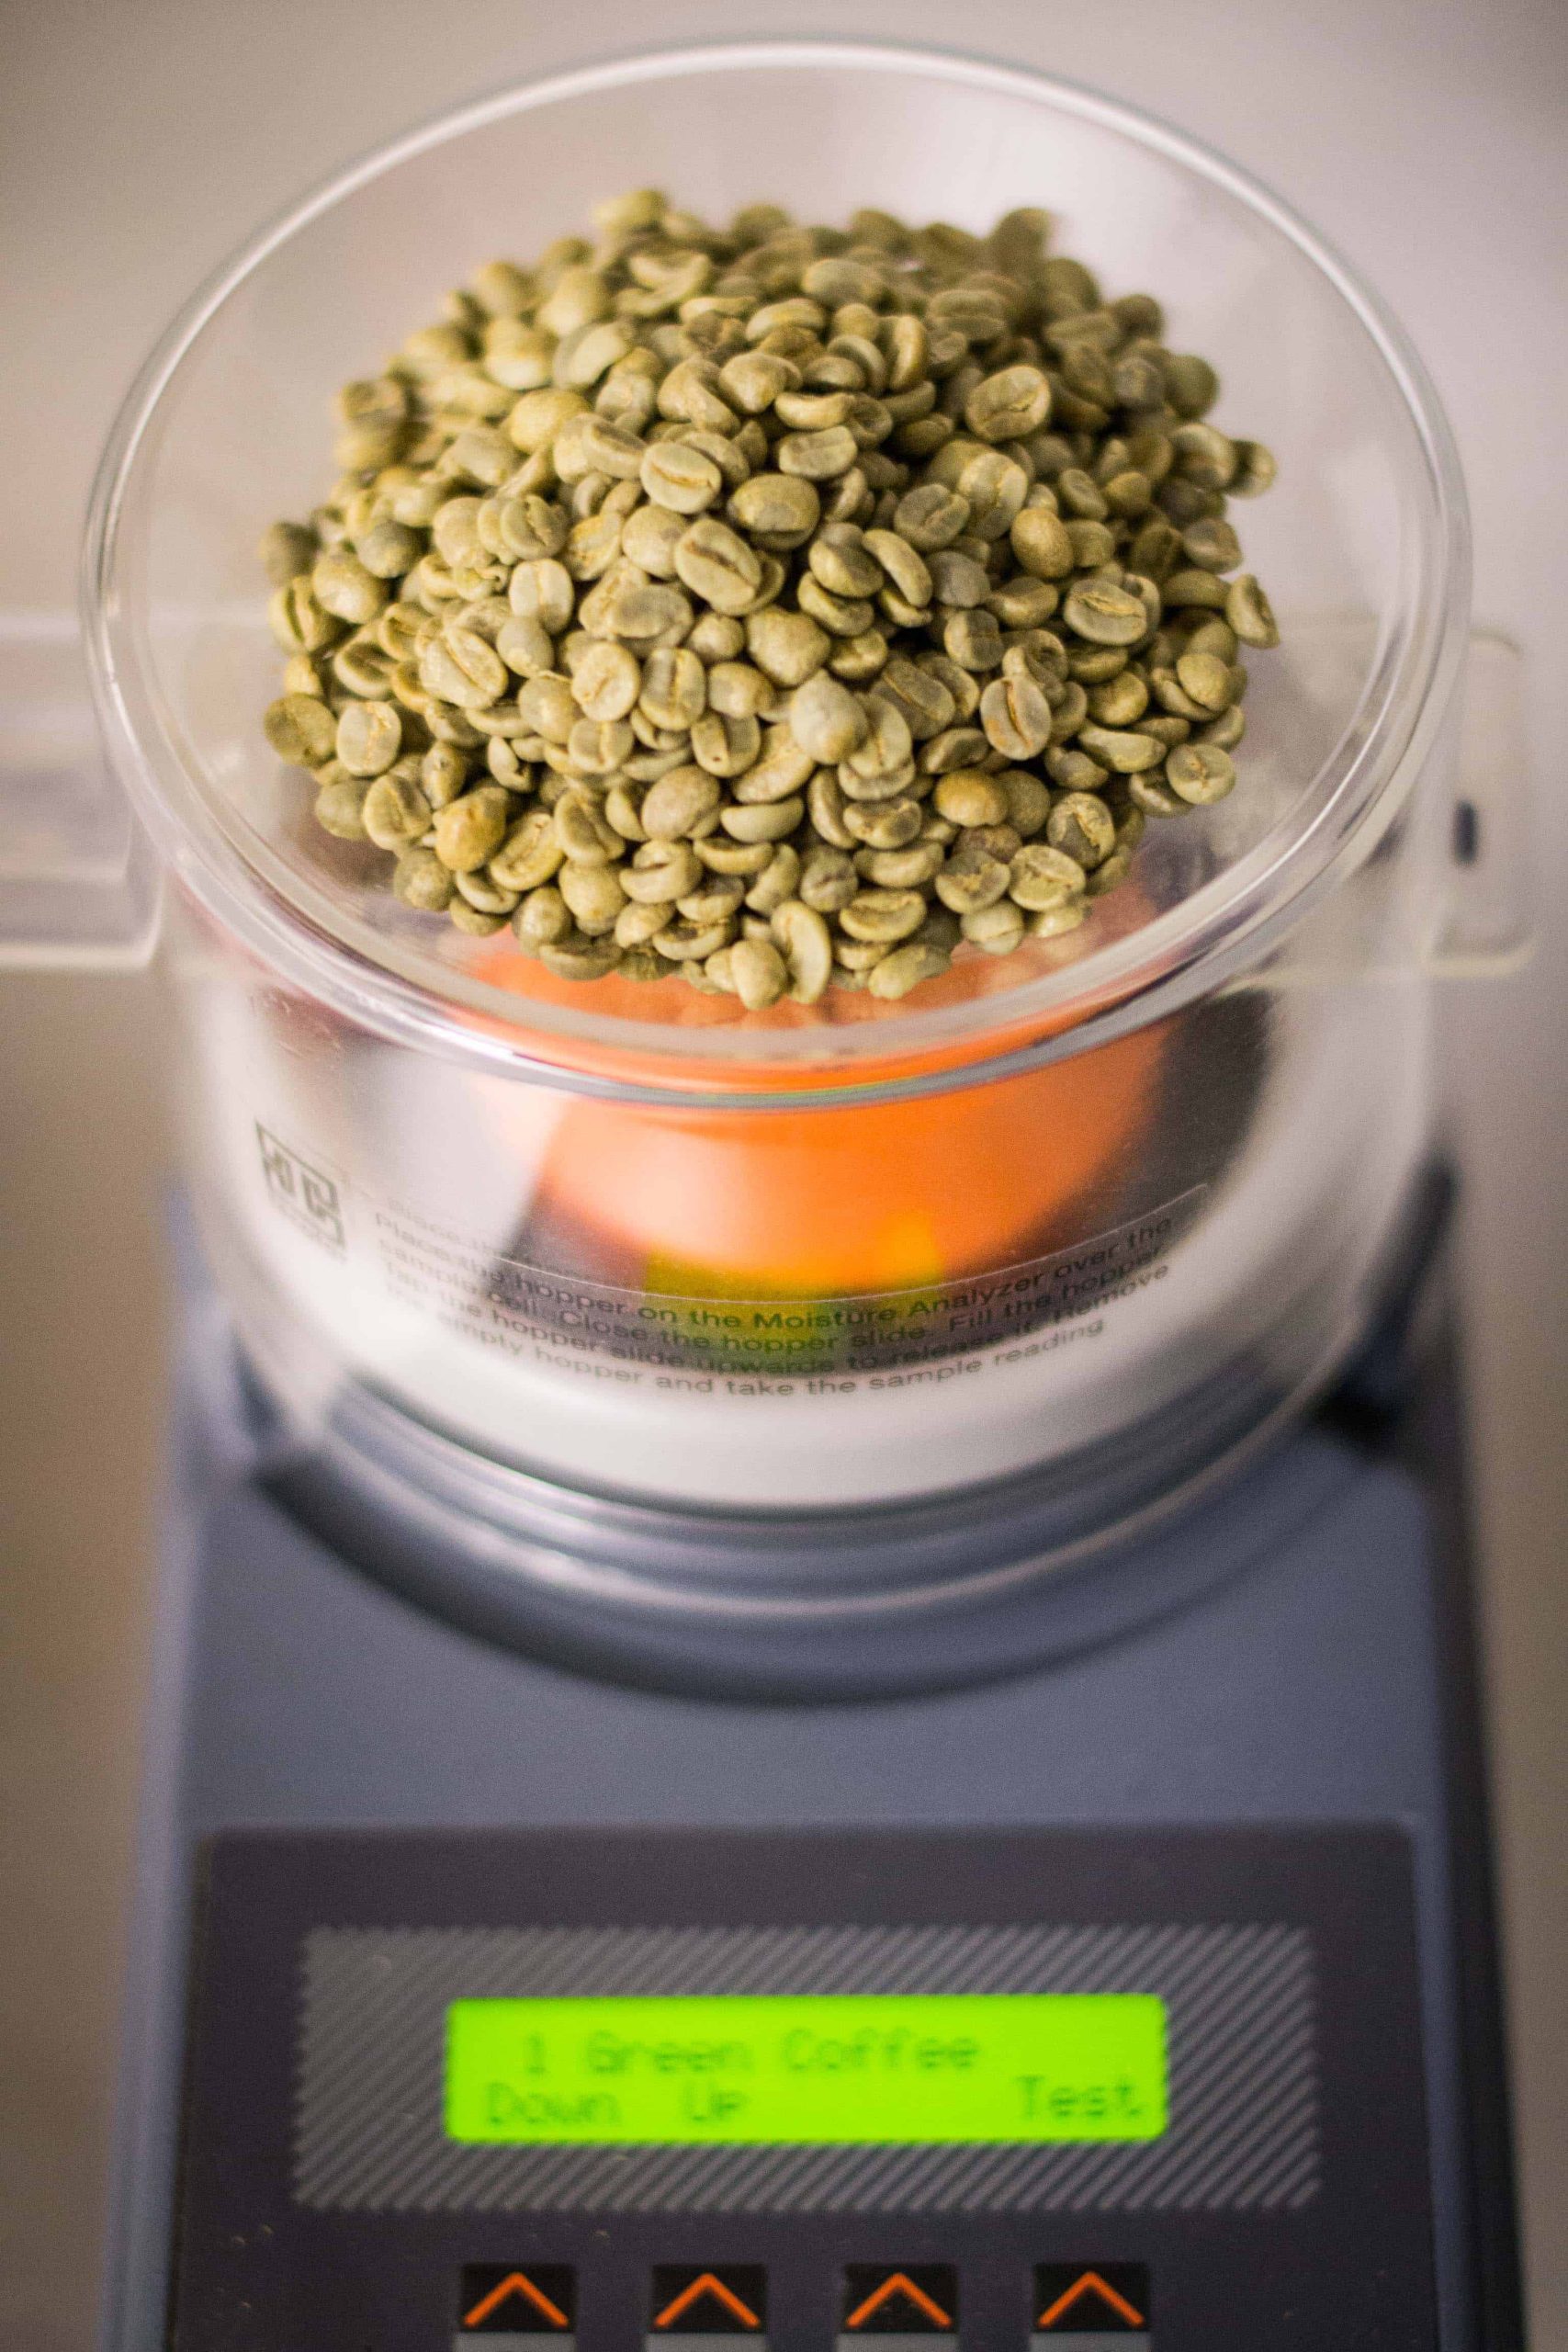 green coffee sitting in a moisture analyzer